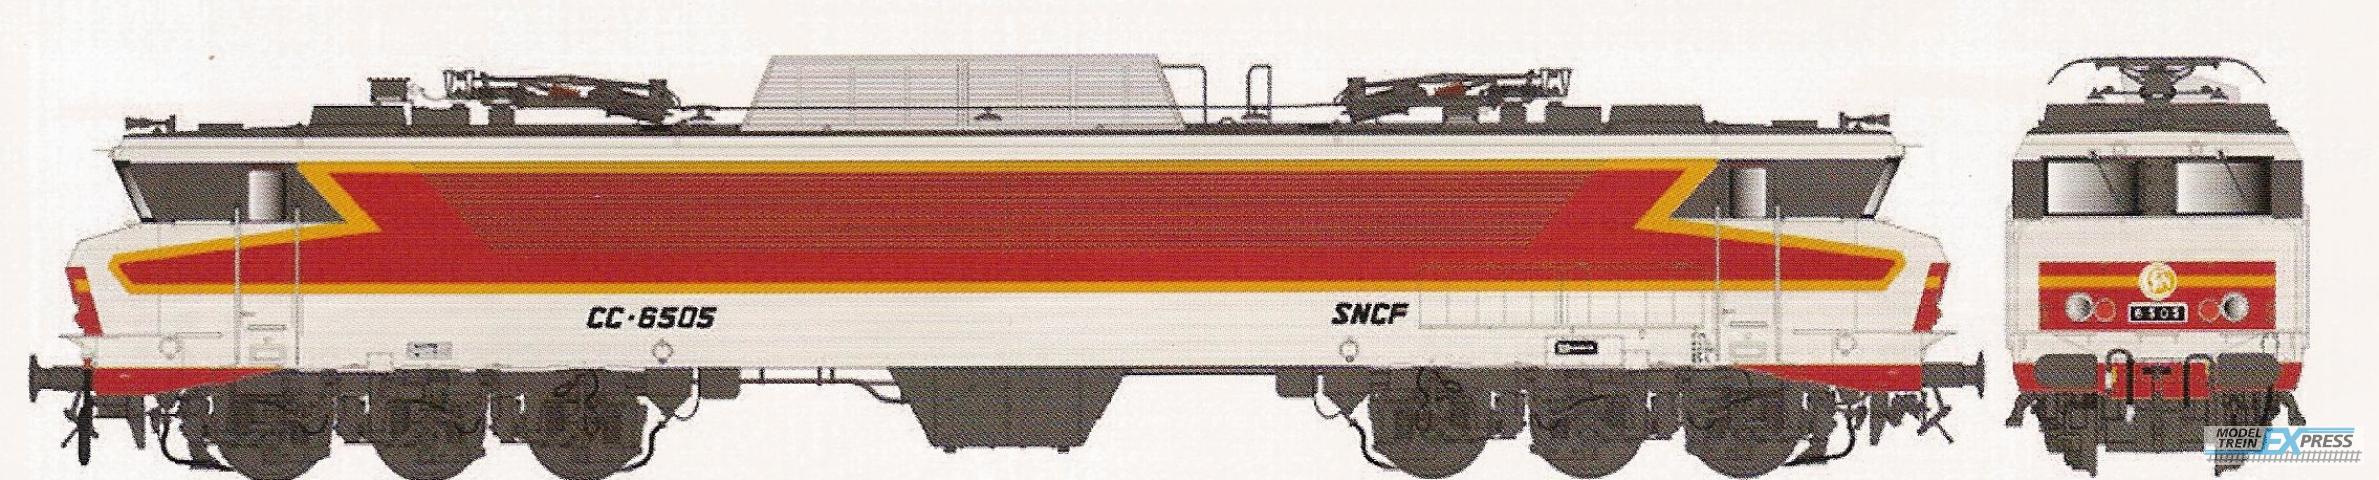 LS Models 10823S CC 6505, grijs/rood/oranje, TEE, platen, Beffara logo, zuidoost  /  Ep. IV  /  SNCF  /  HO  /  AC SOUND  /  1 P.